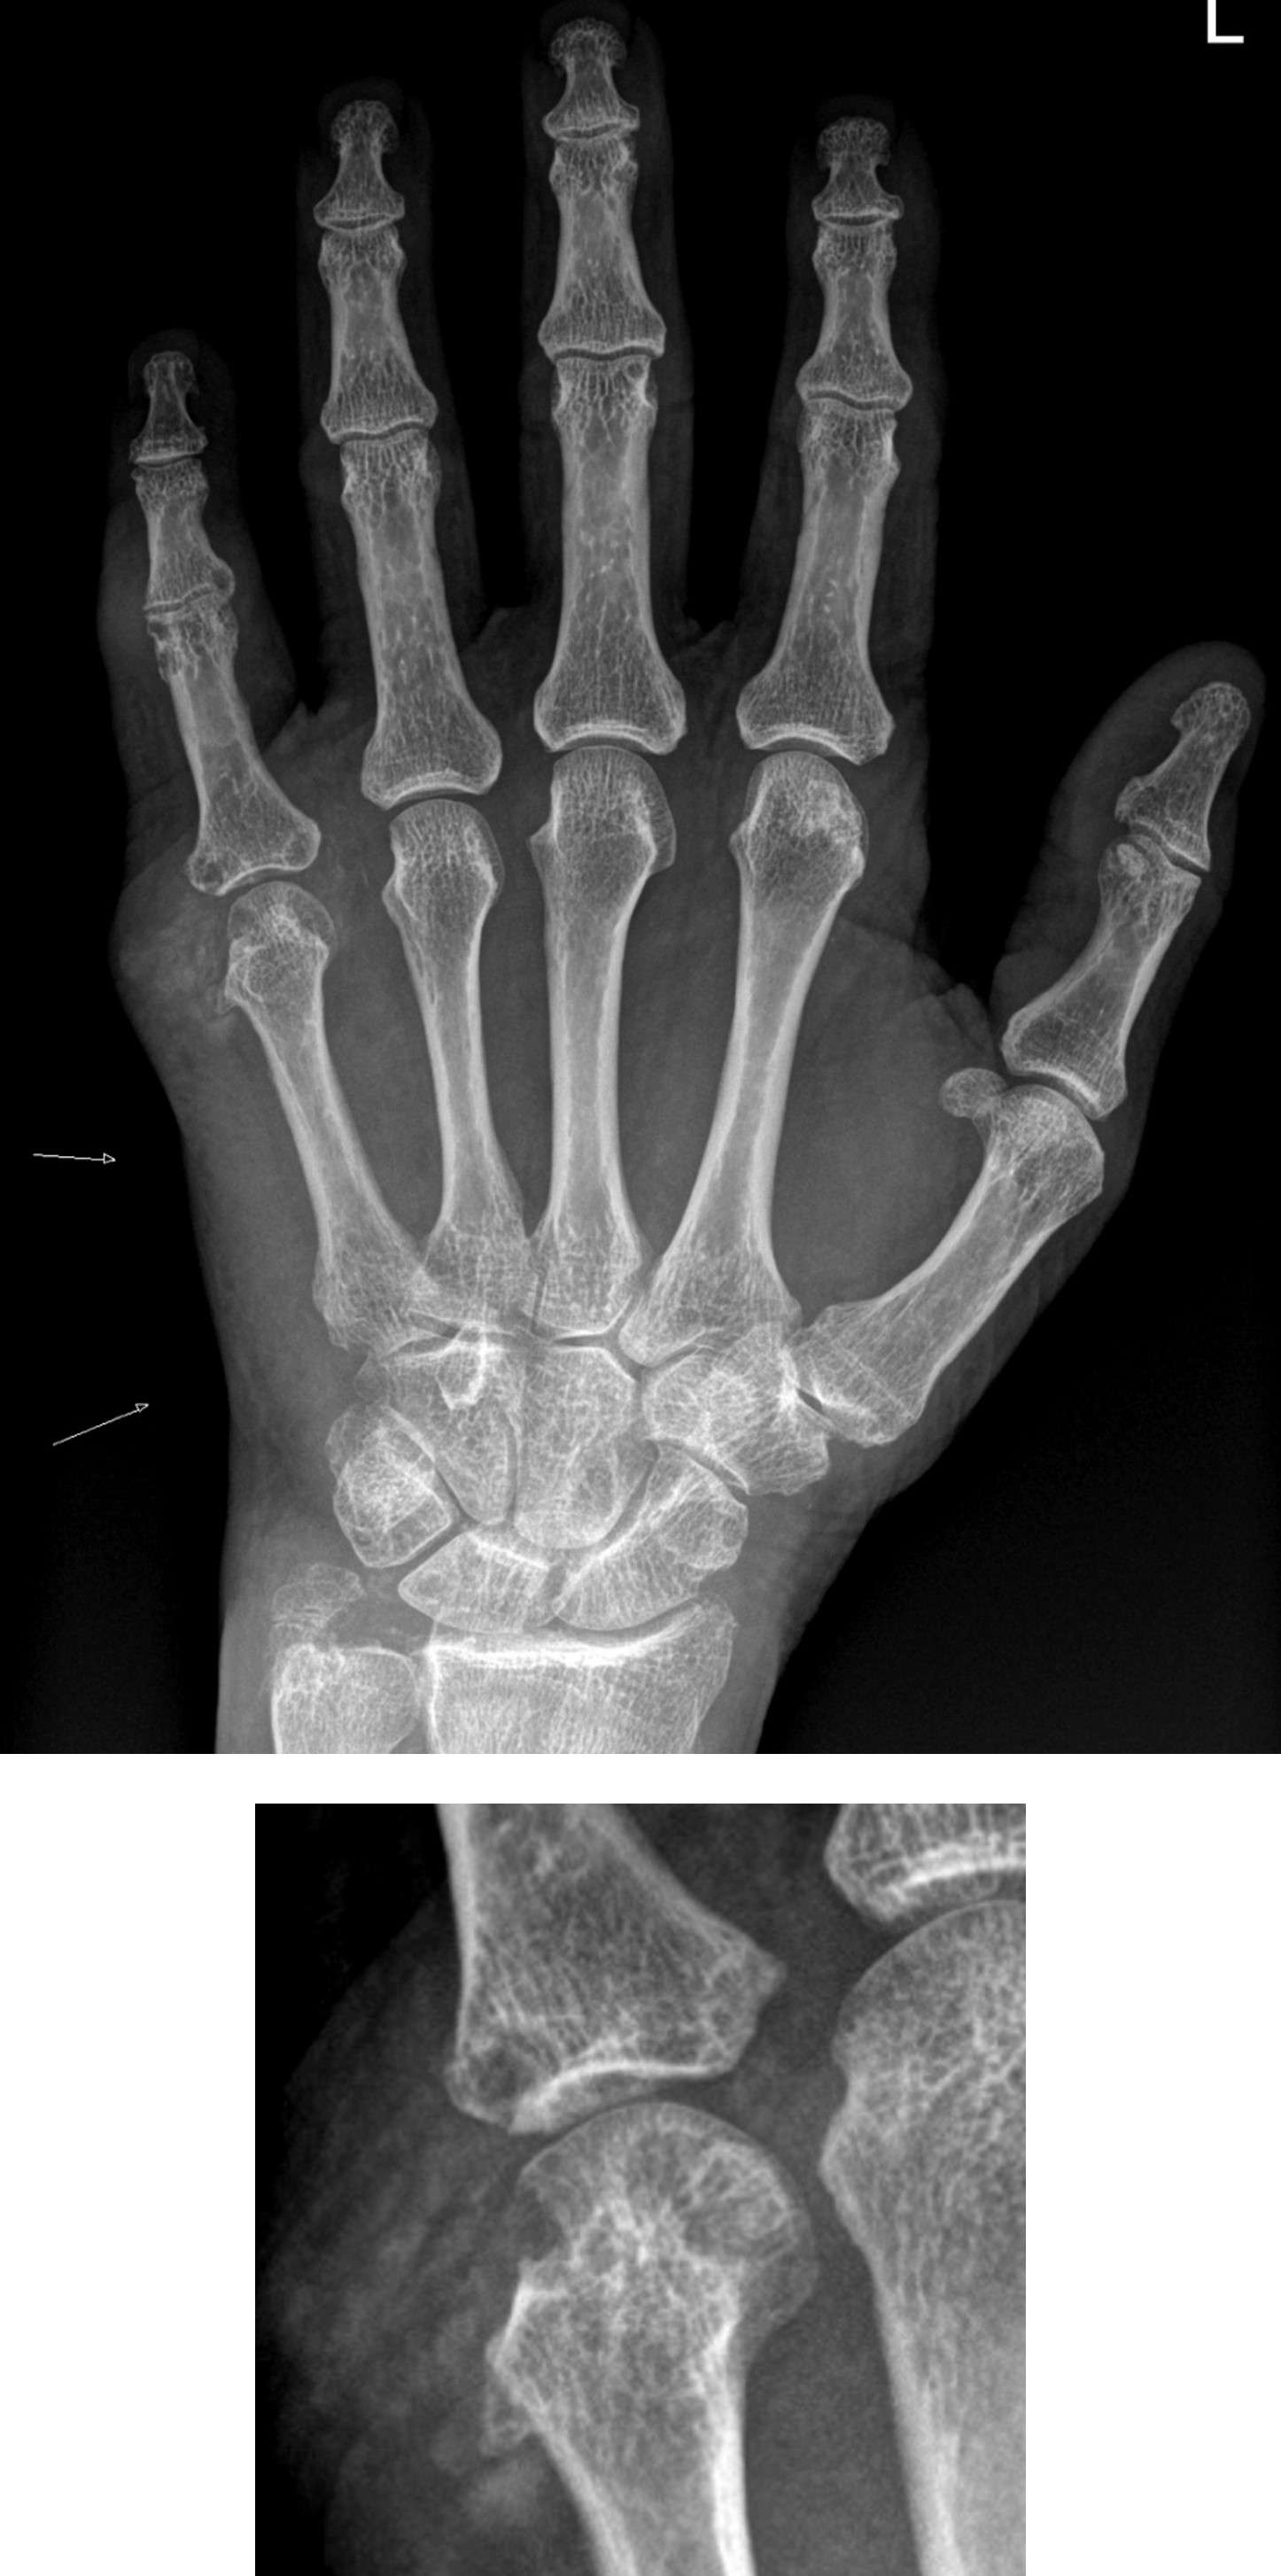 Hand Arthropathy